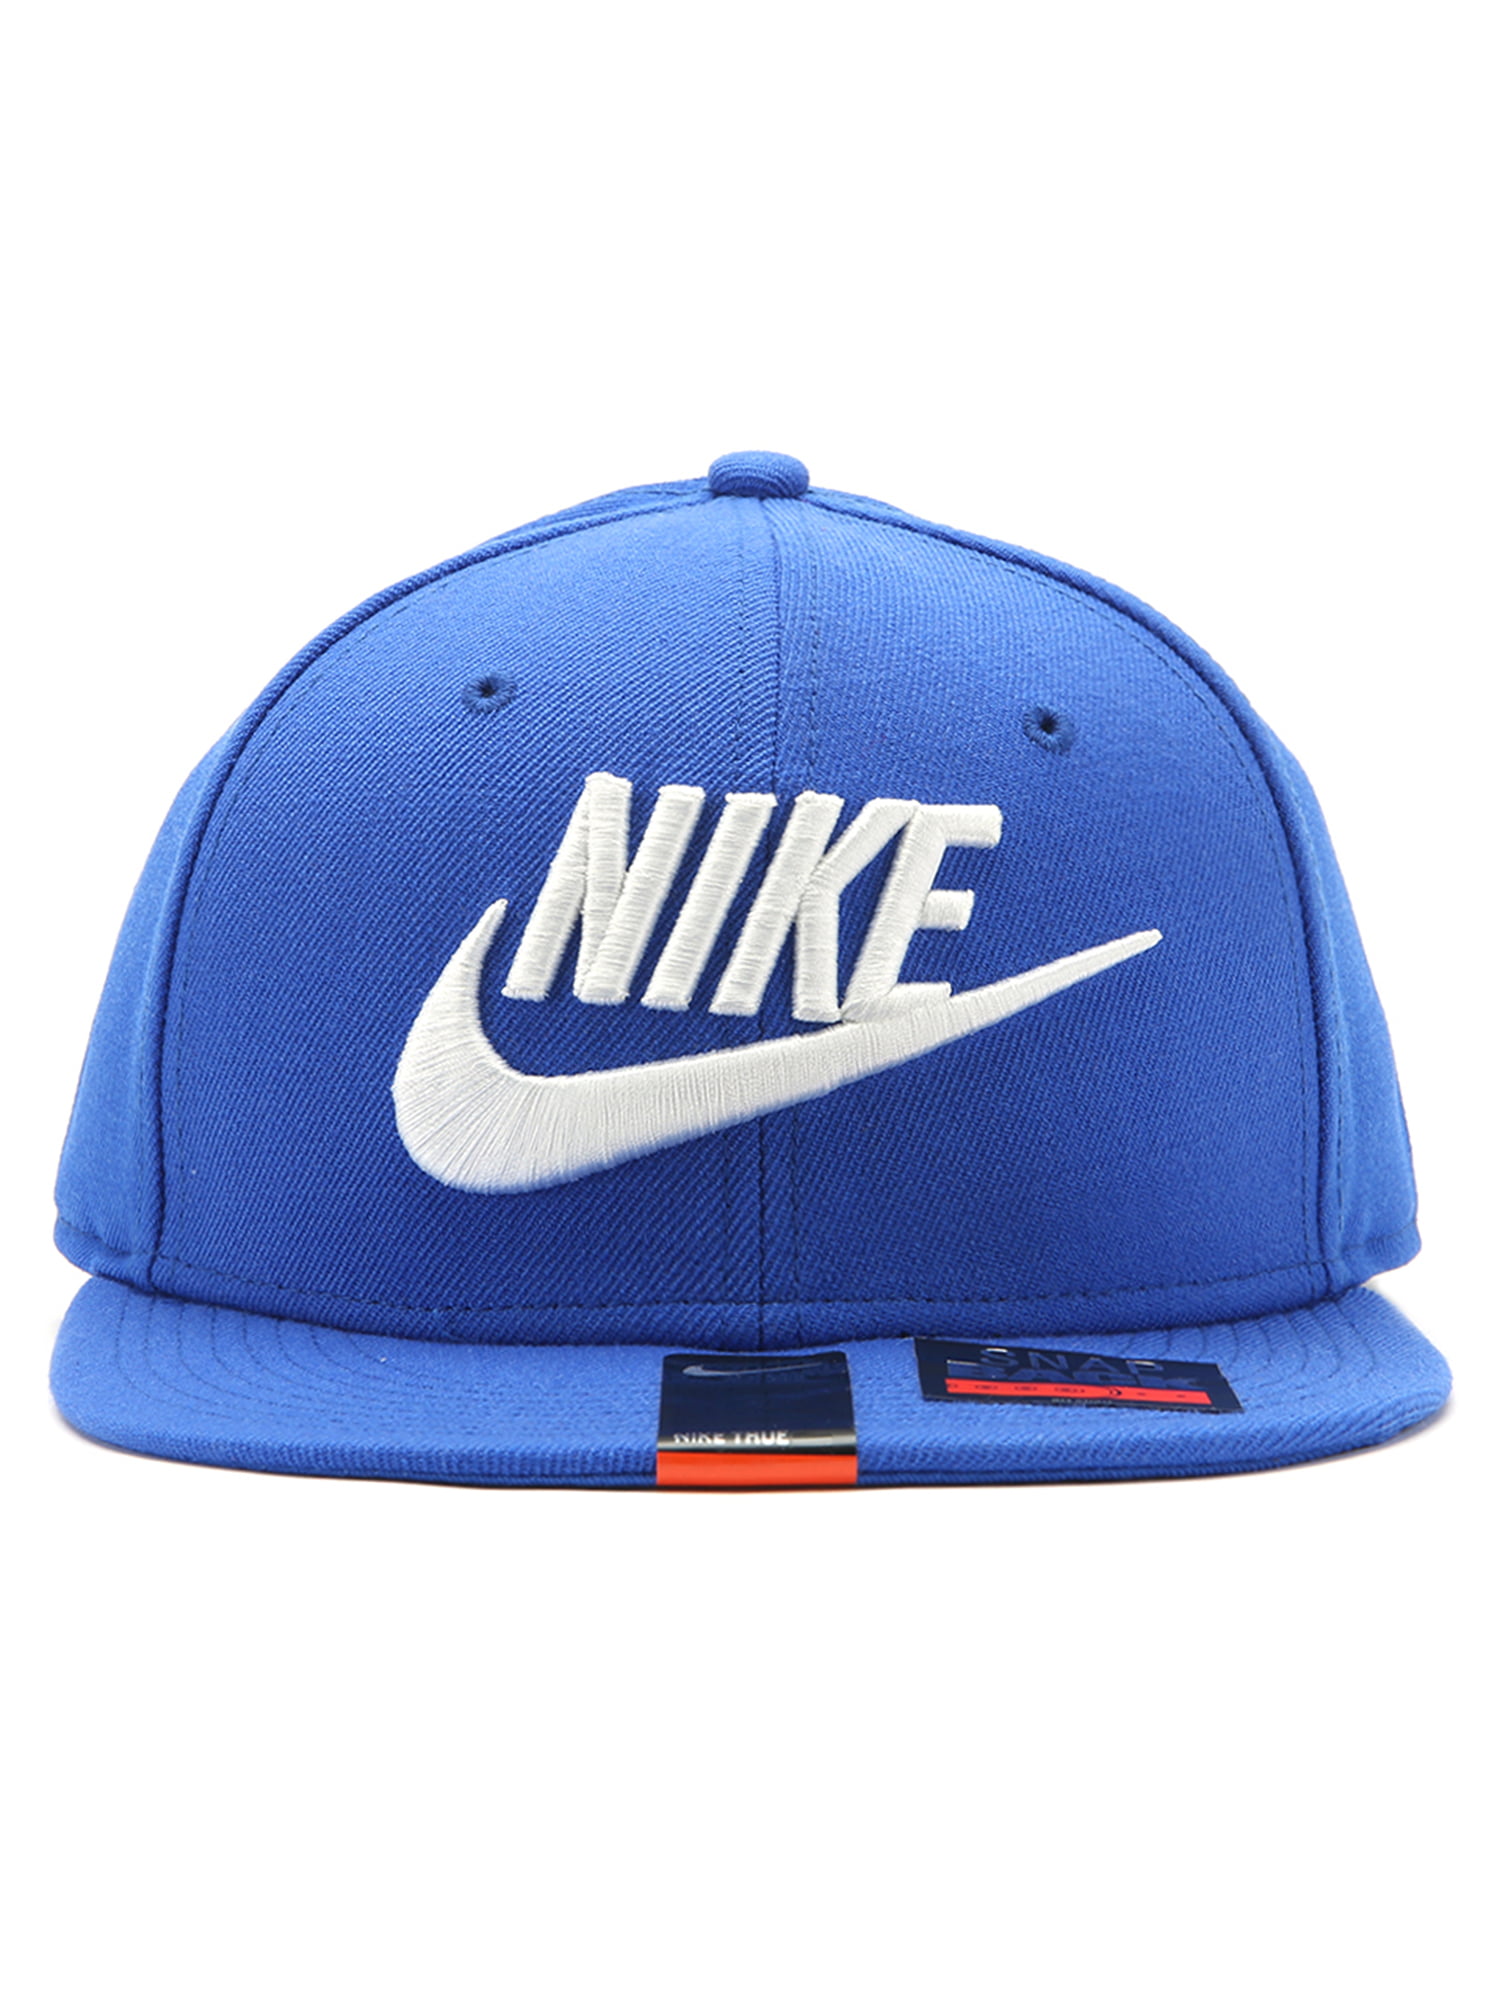 584169 True Royal Blue/White Hat Snapback 2 Futura Nike